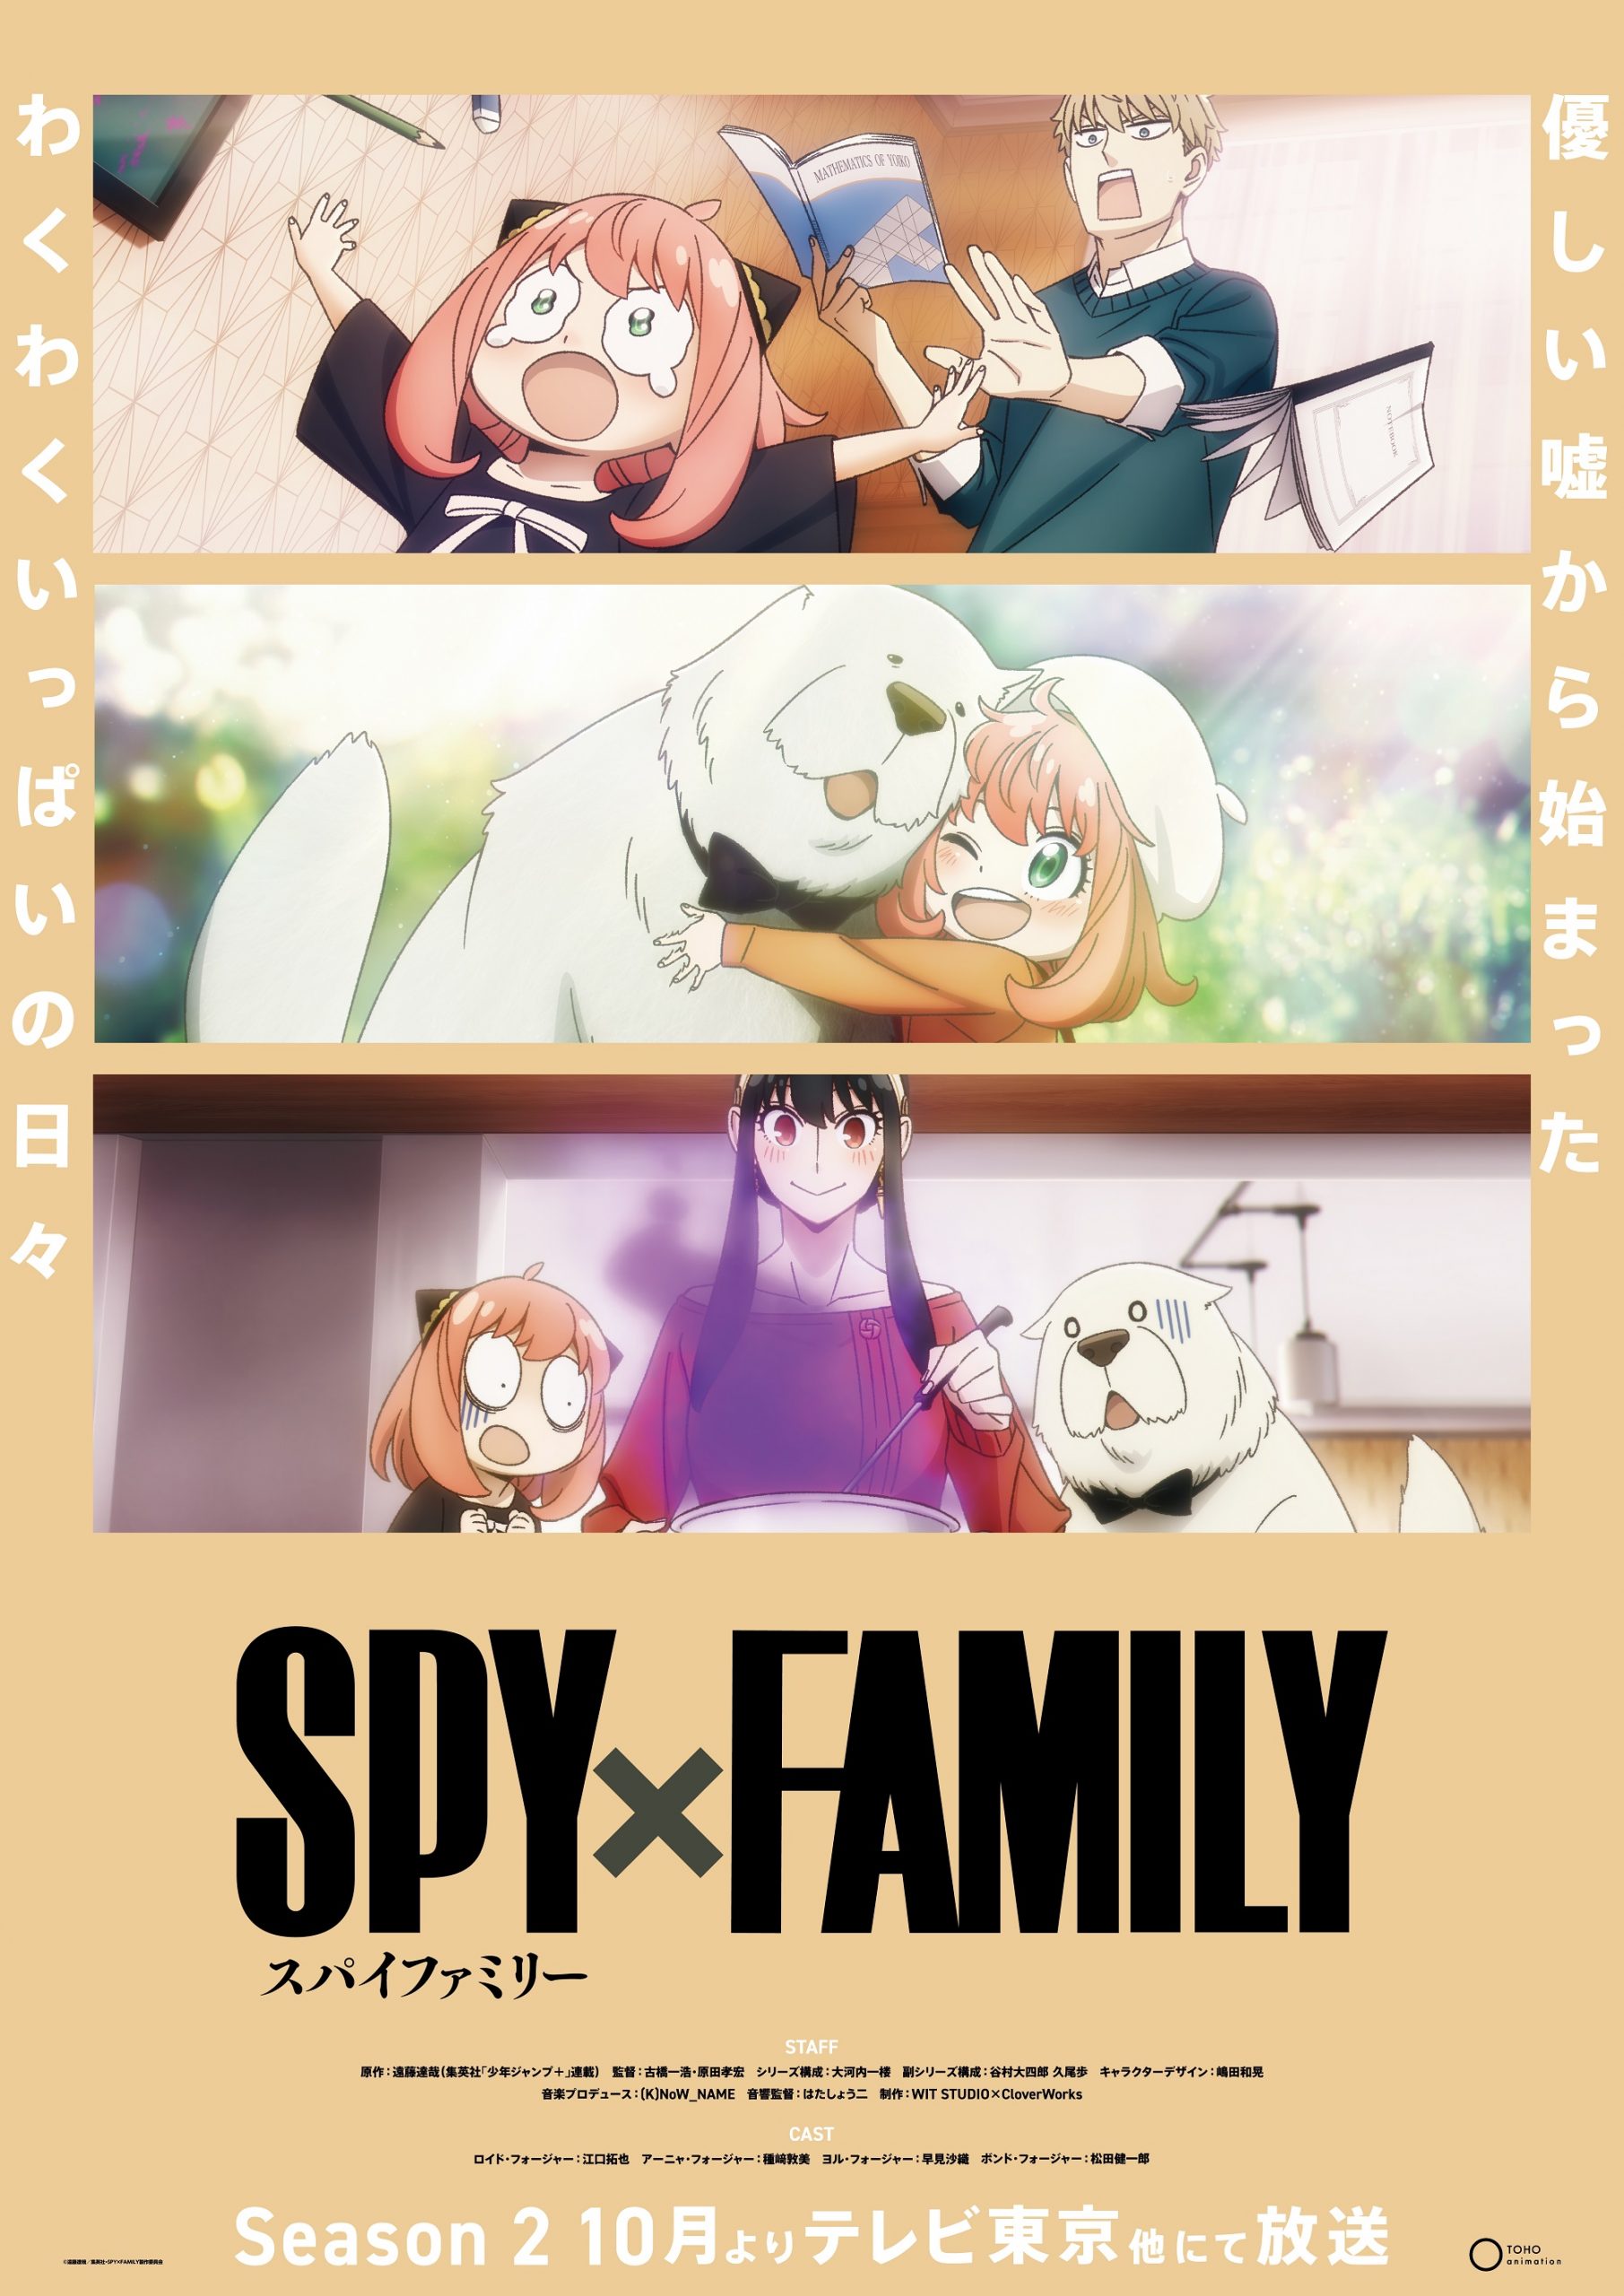 Spy x Family Season 2 Gets New Trailer, Previews Theme Songs by